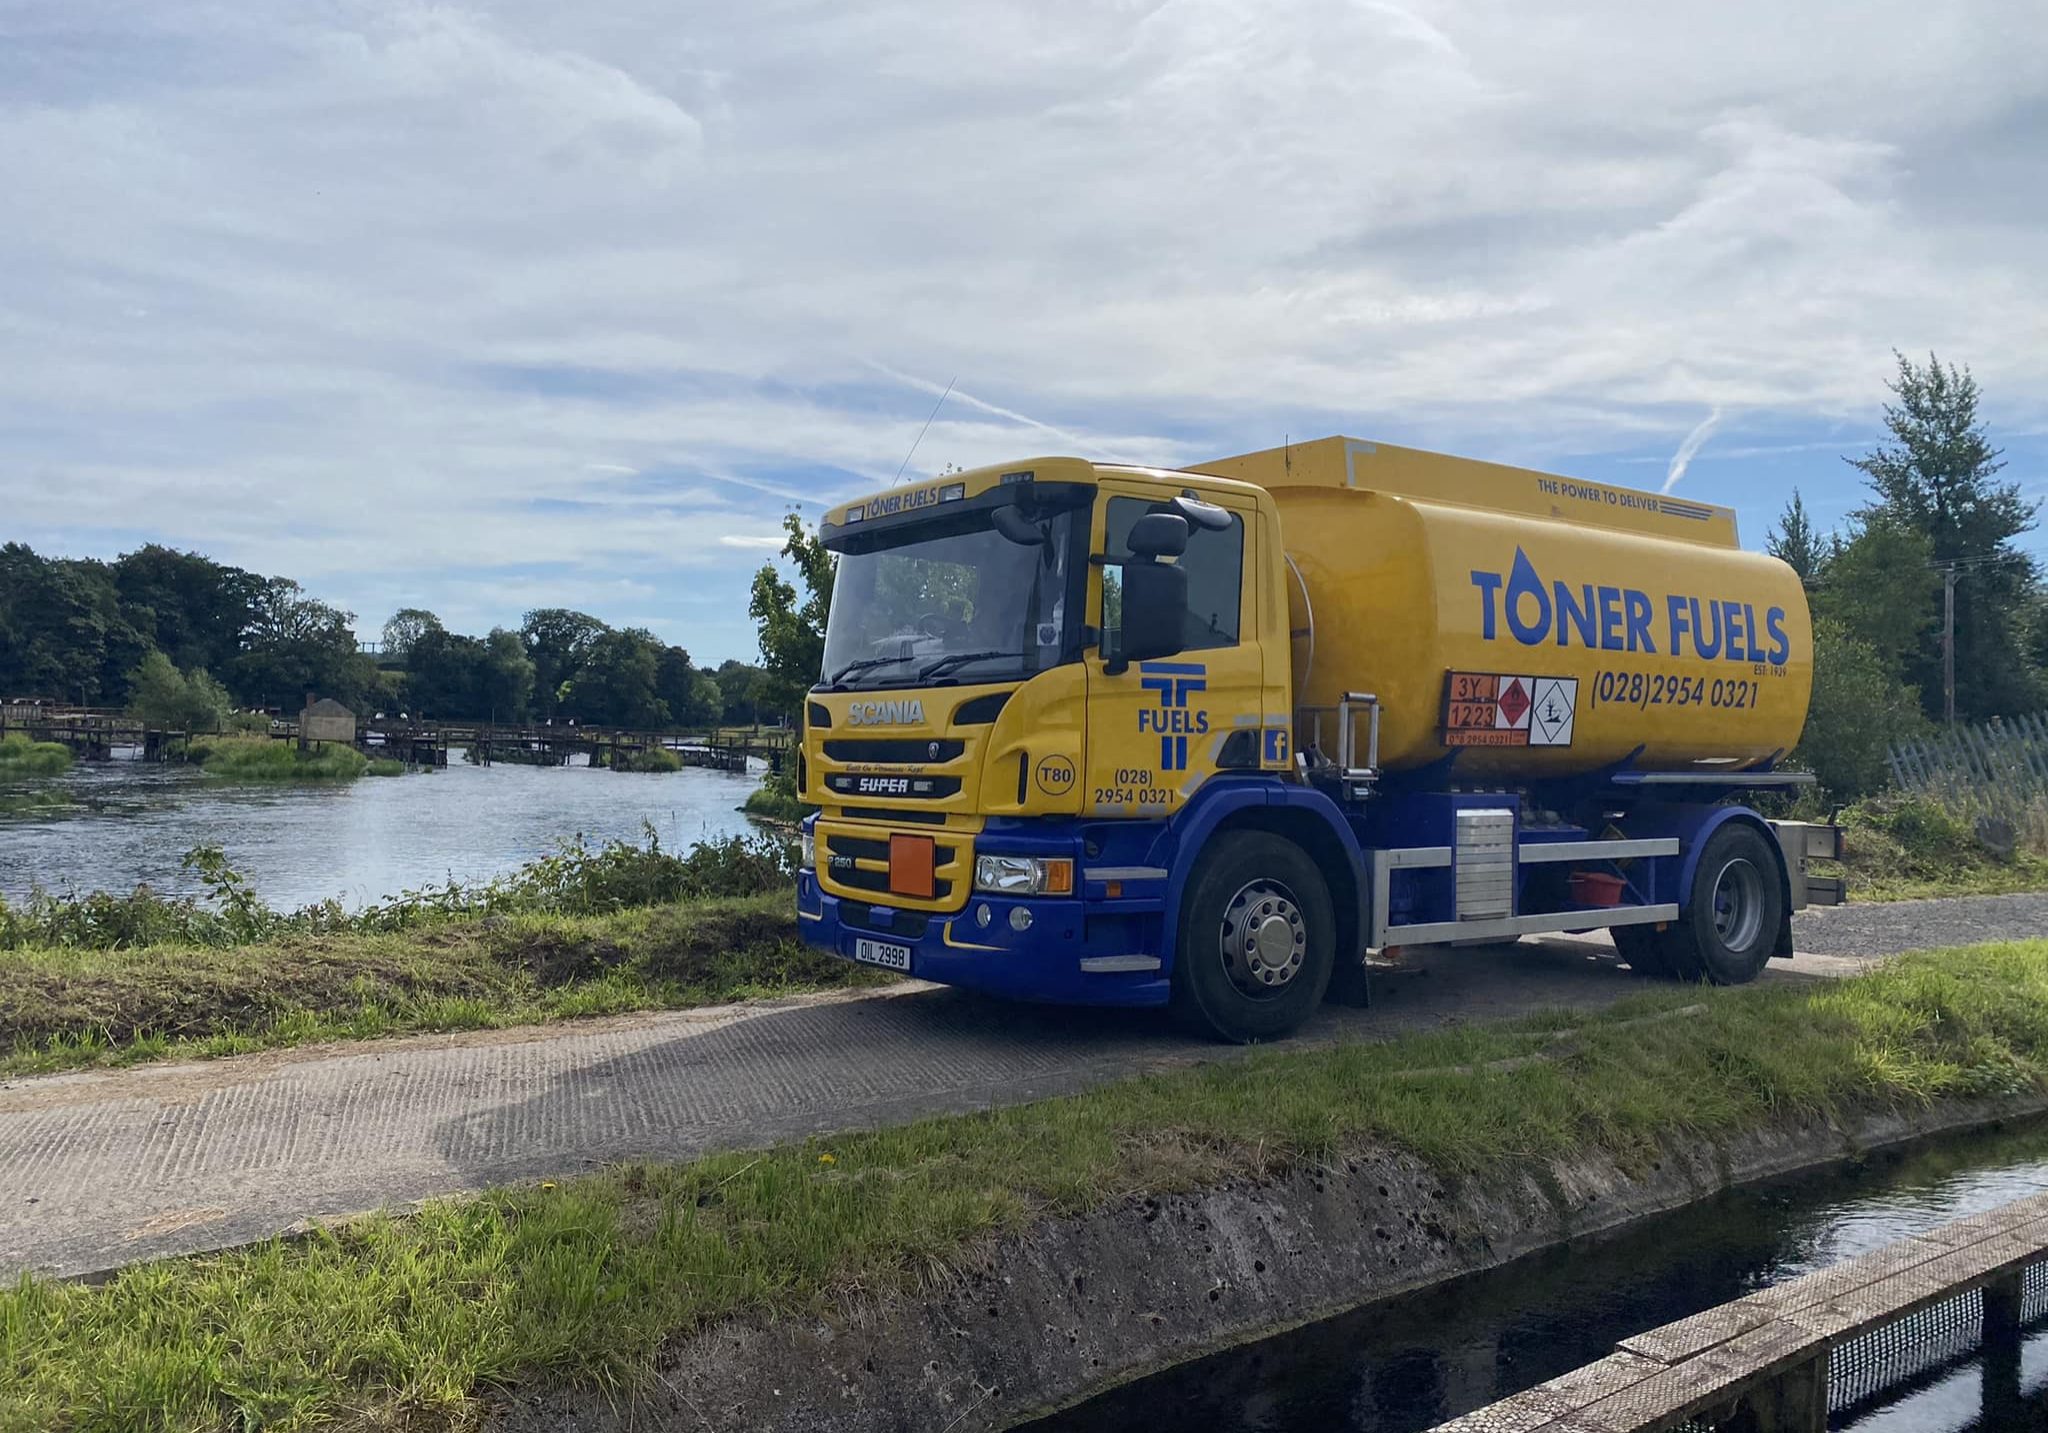 Toner fuels truck at waterside of lake